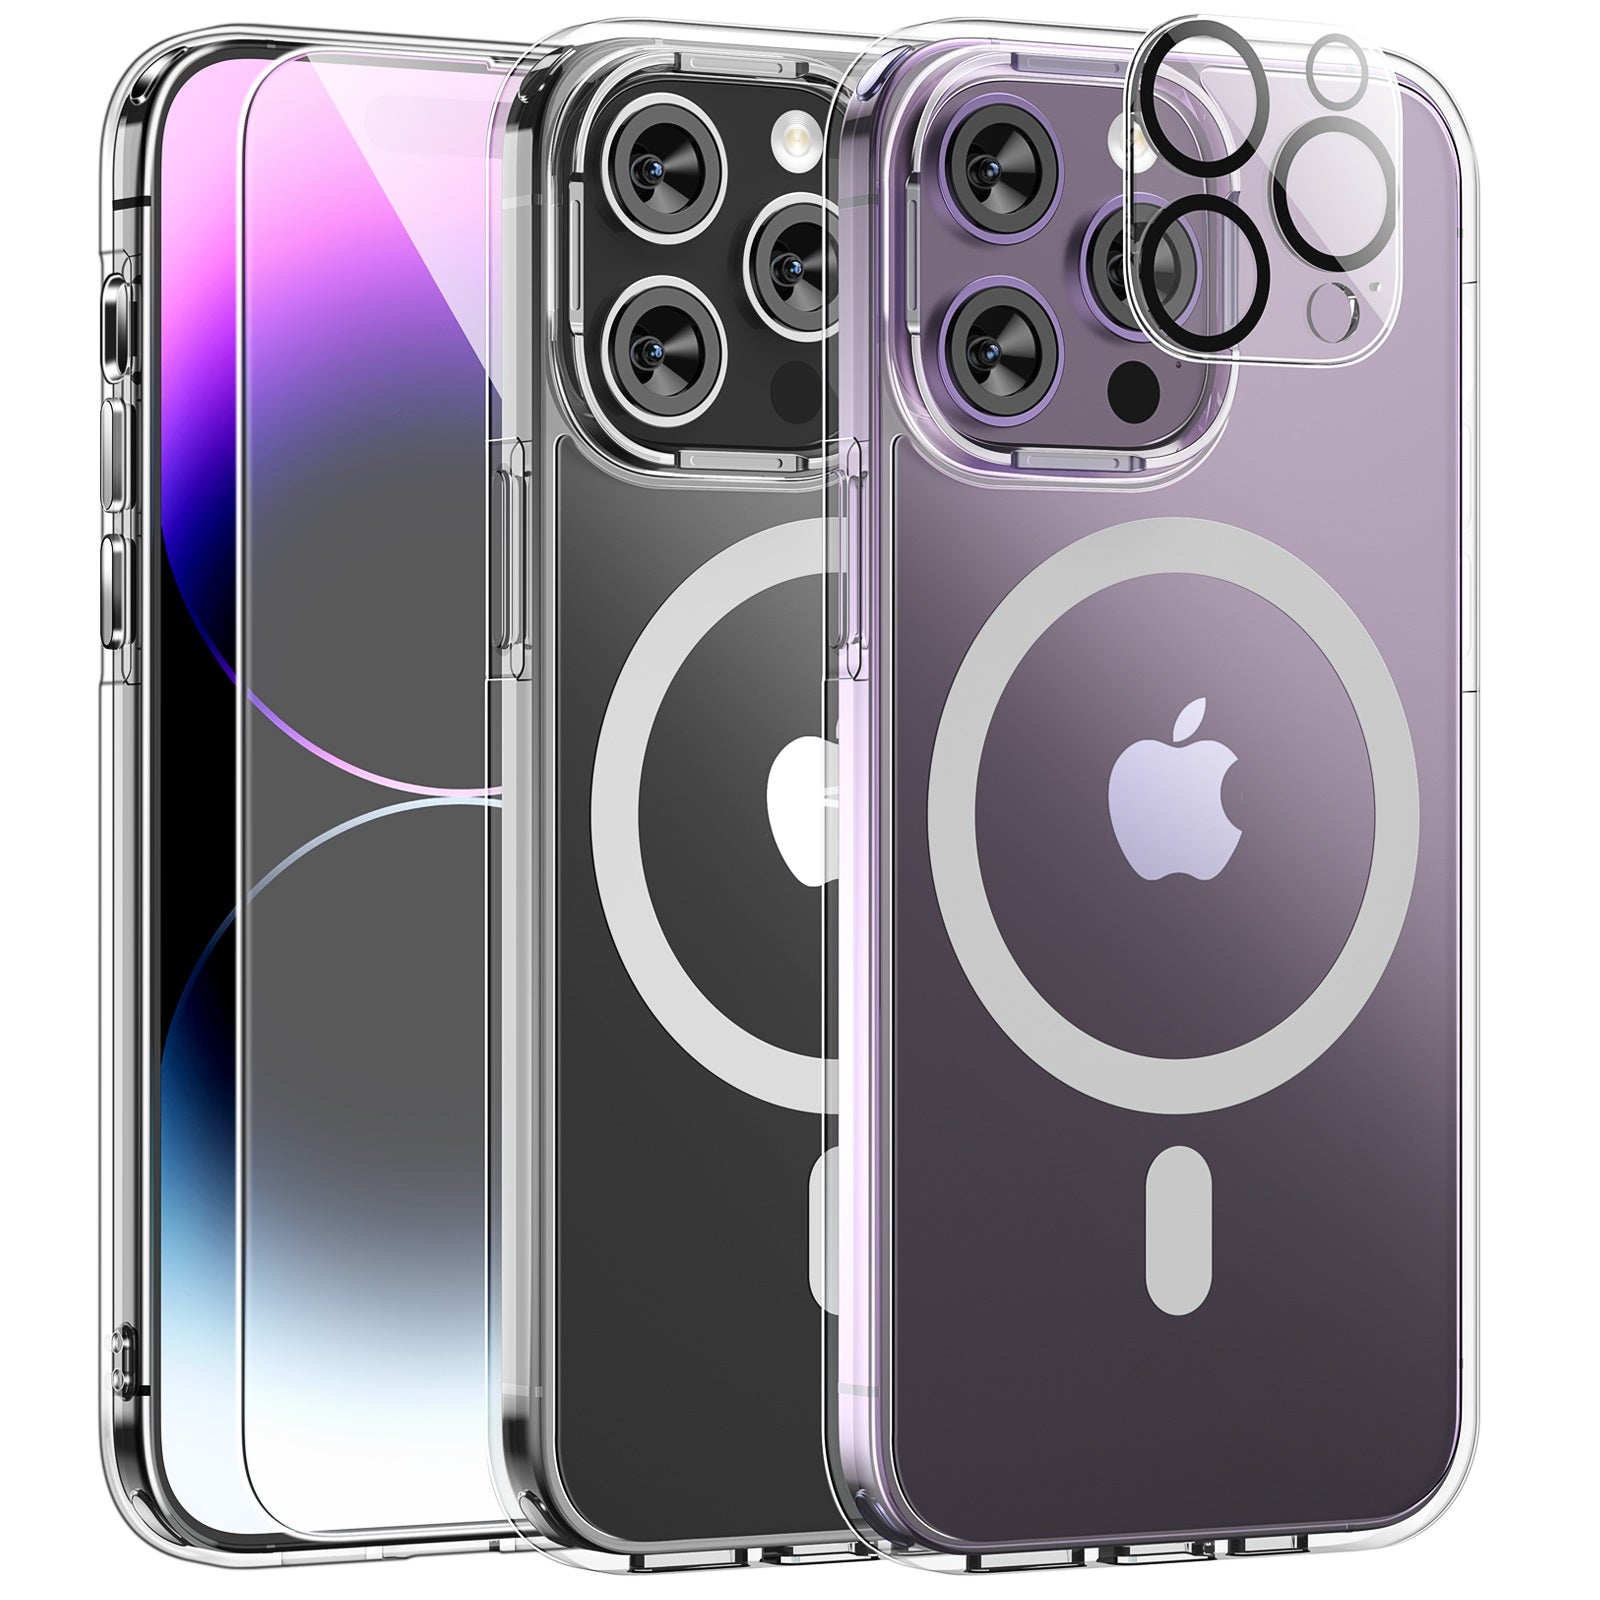 Slim transparent cover for iPhone 14 Pro Max